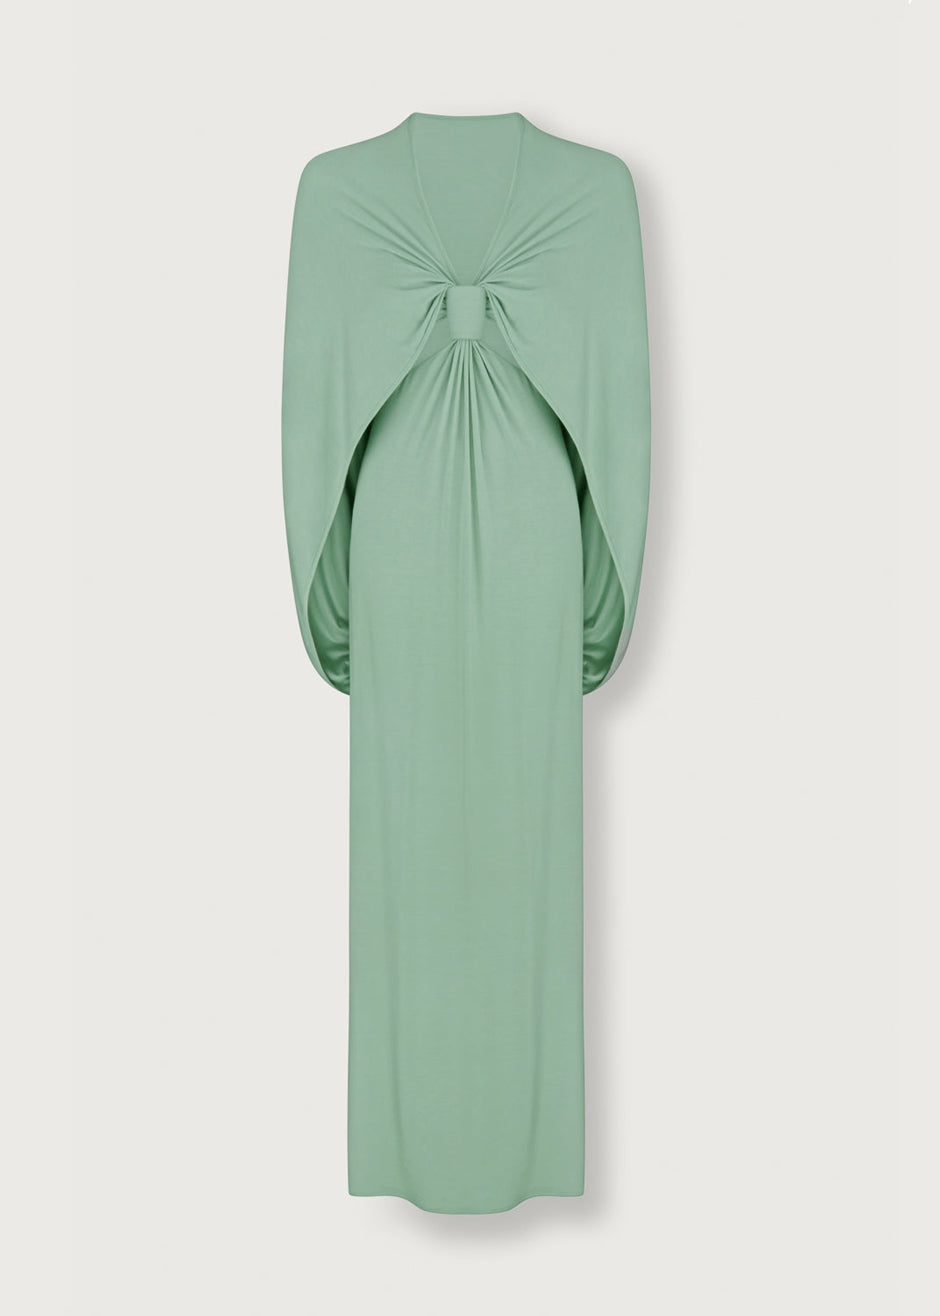 Bevza Cape and Sail Collar Dress - Mint Green - 5